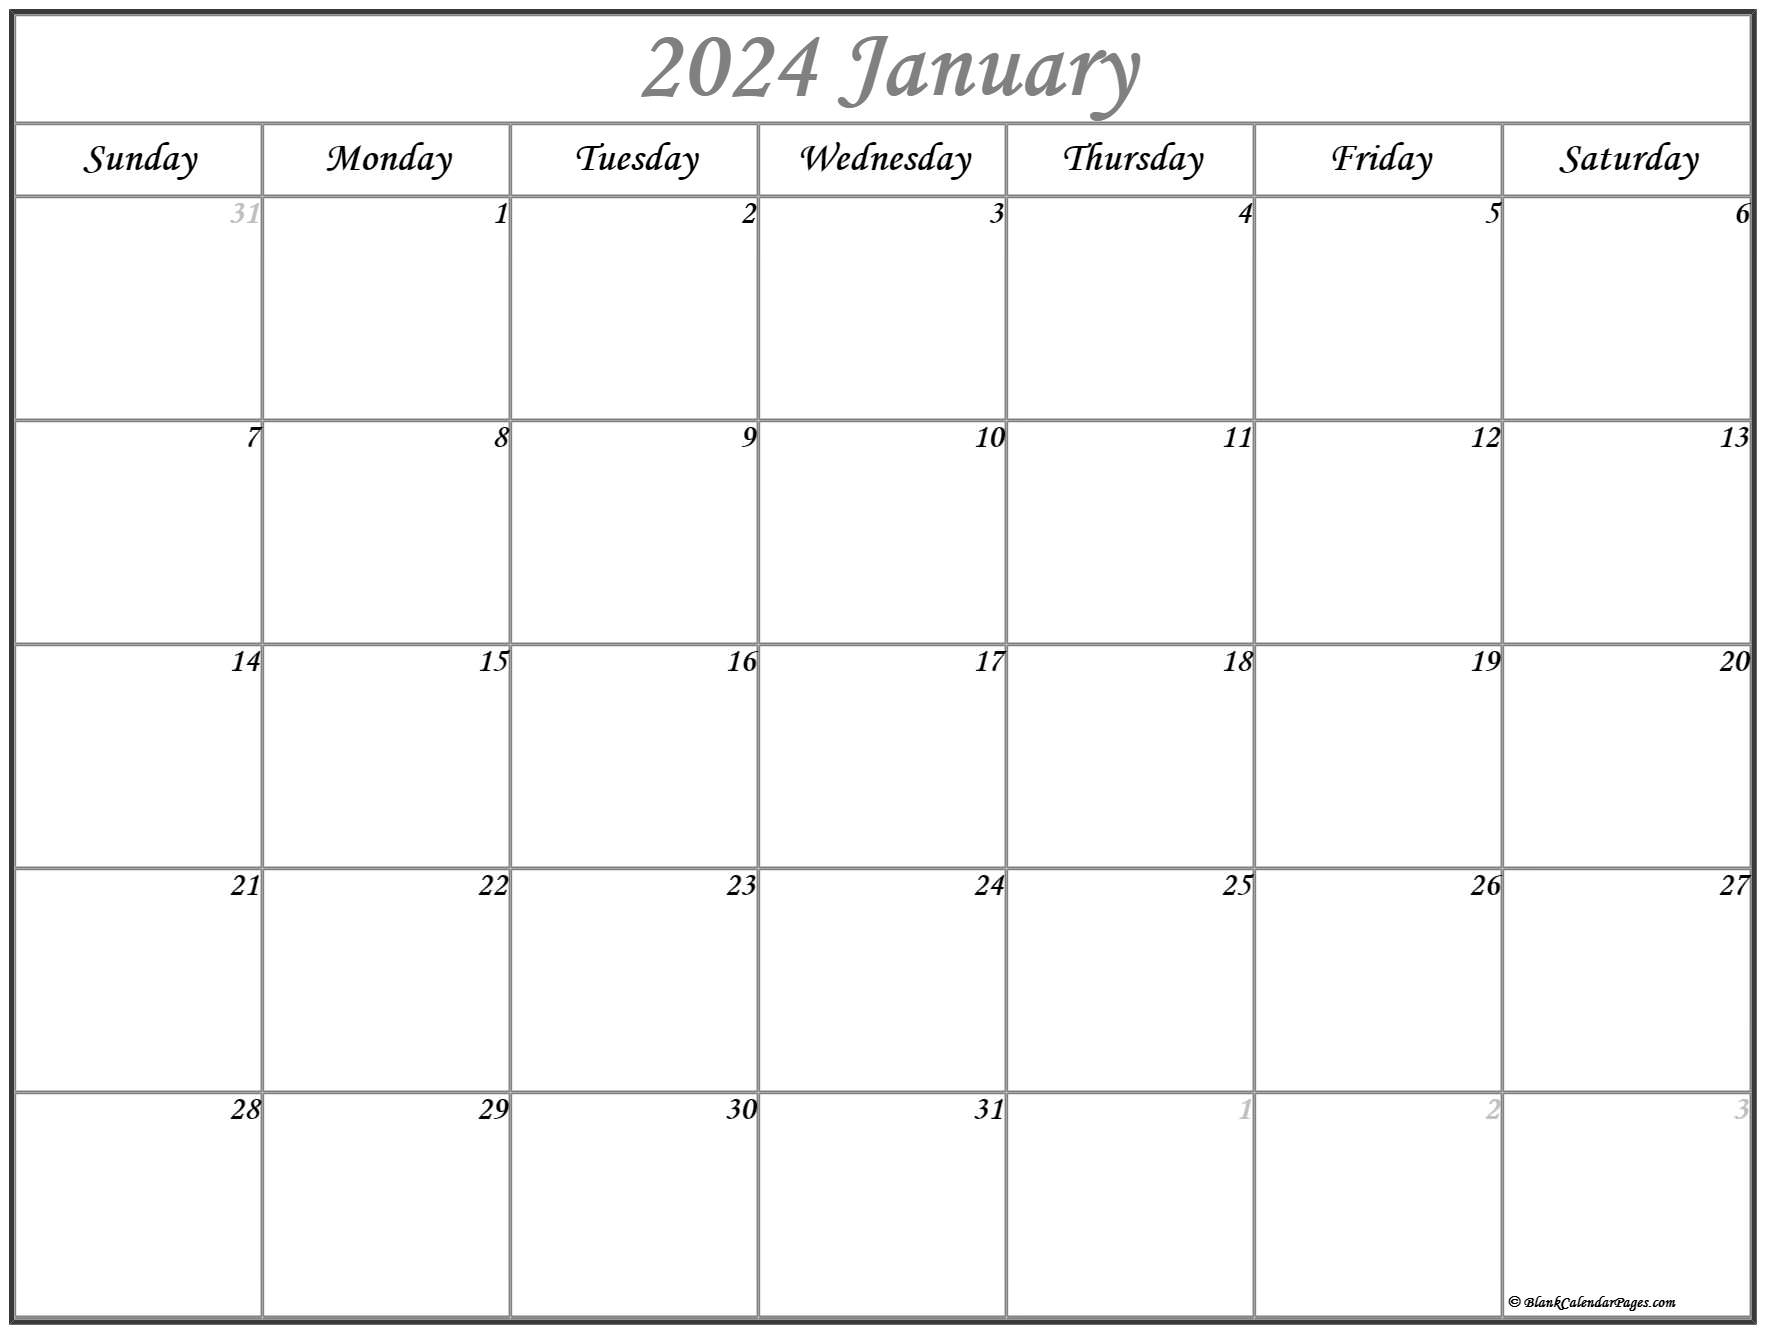 2024 Monthly Calendar Pdf Free Printable Templates 2024 Monthly - Free Printable 2 Page Monthly Calendar 2024